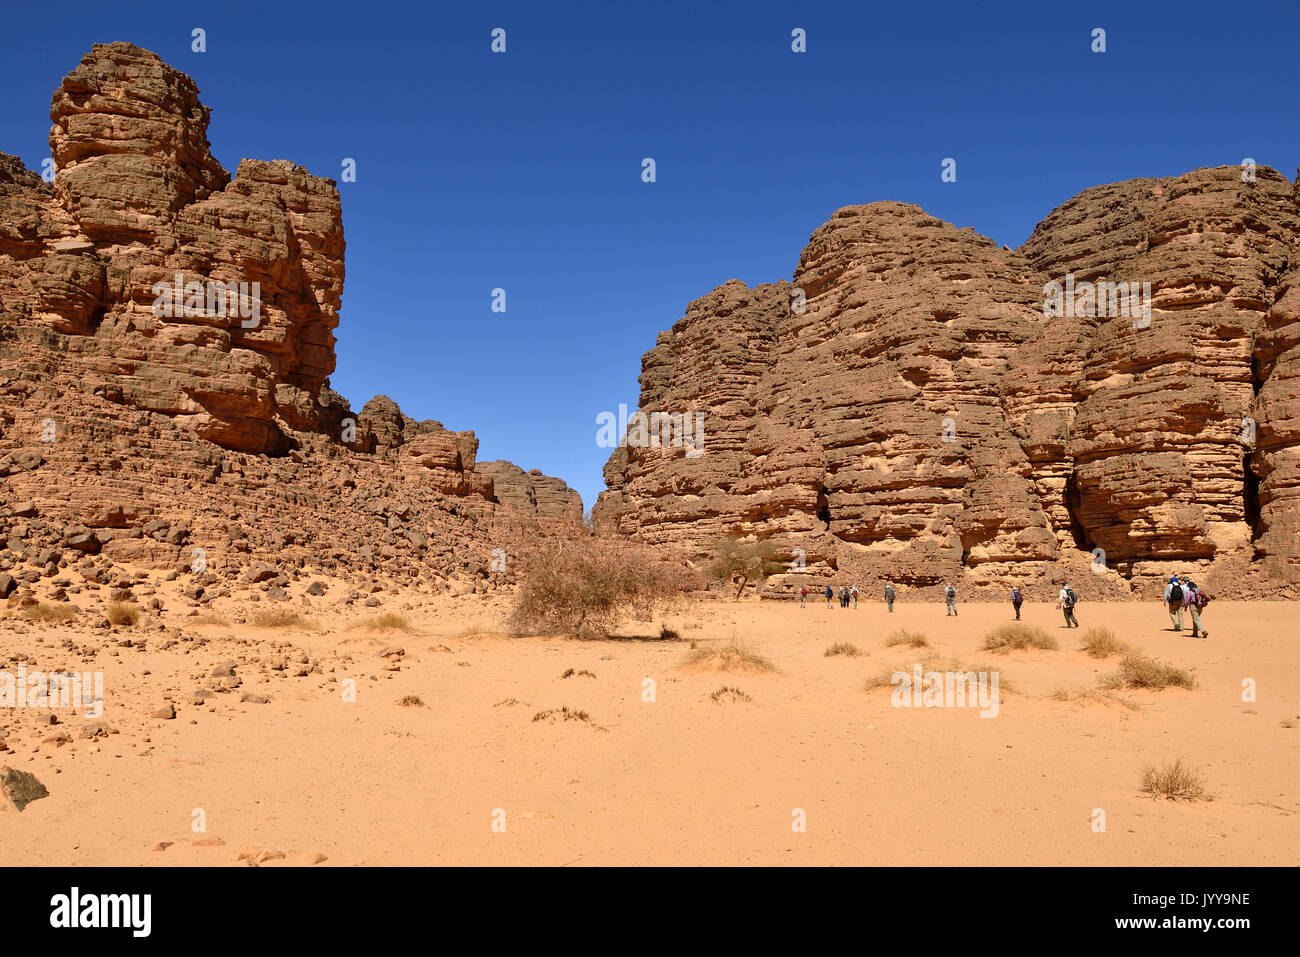 Hikers, group of people hiking in a canyon, Tassili n'Ajjer National Park, Sahara desert, Algeria Stock Photo